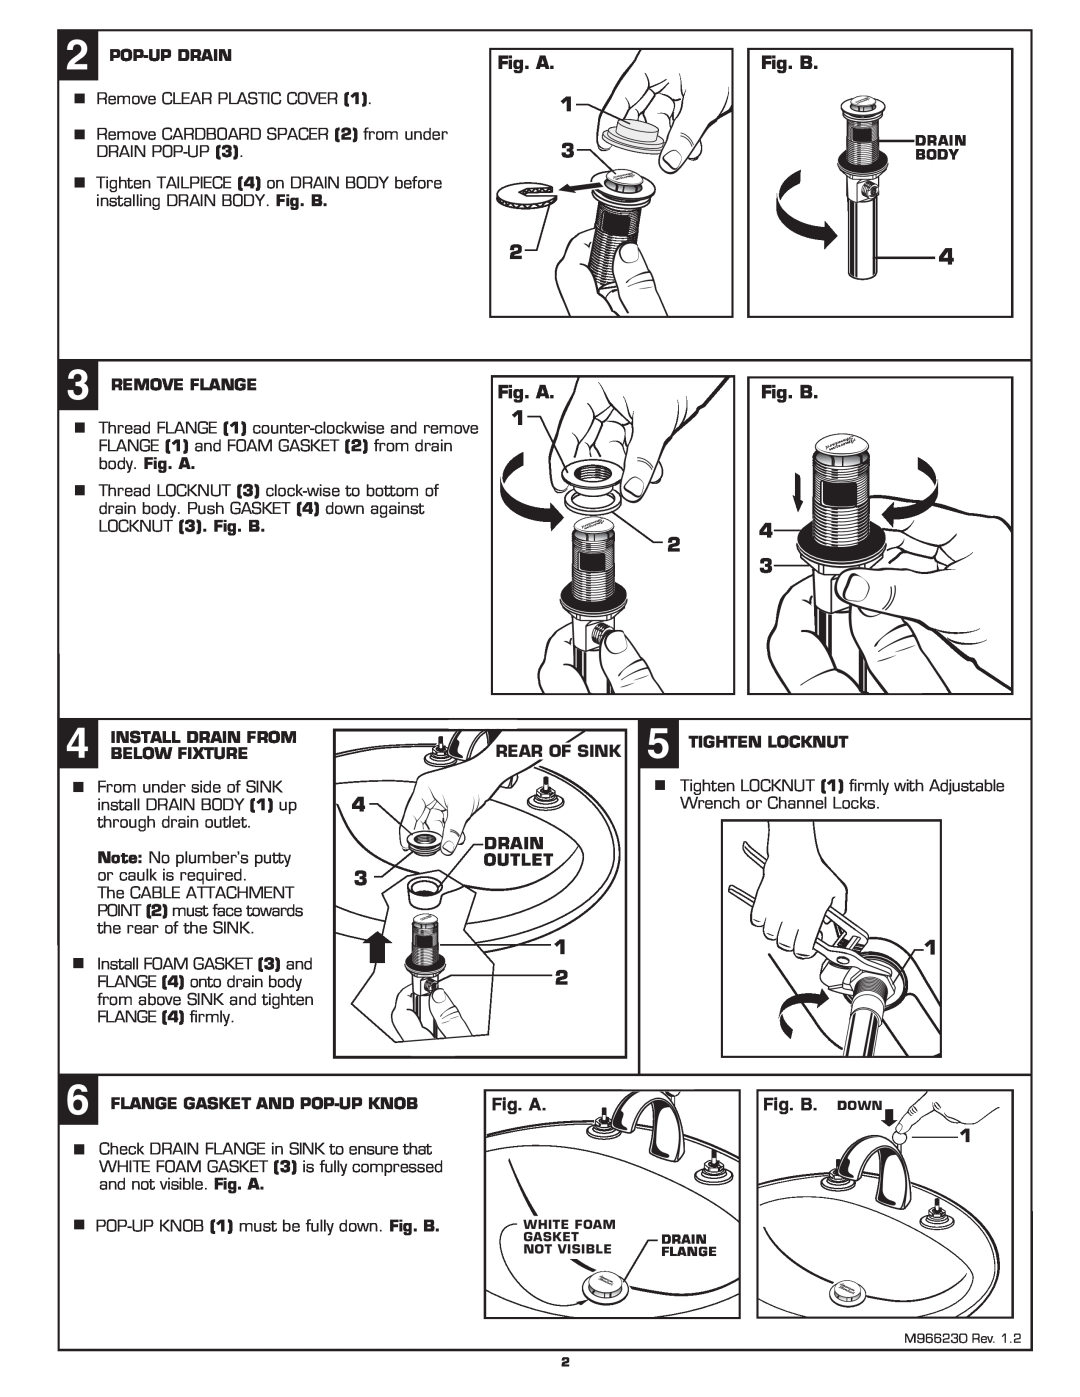 American Standard 8871 installation instructions Fig. A, Fig. B 